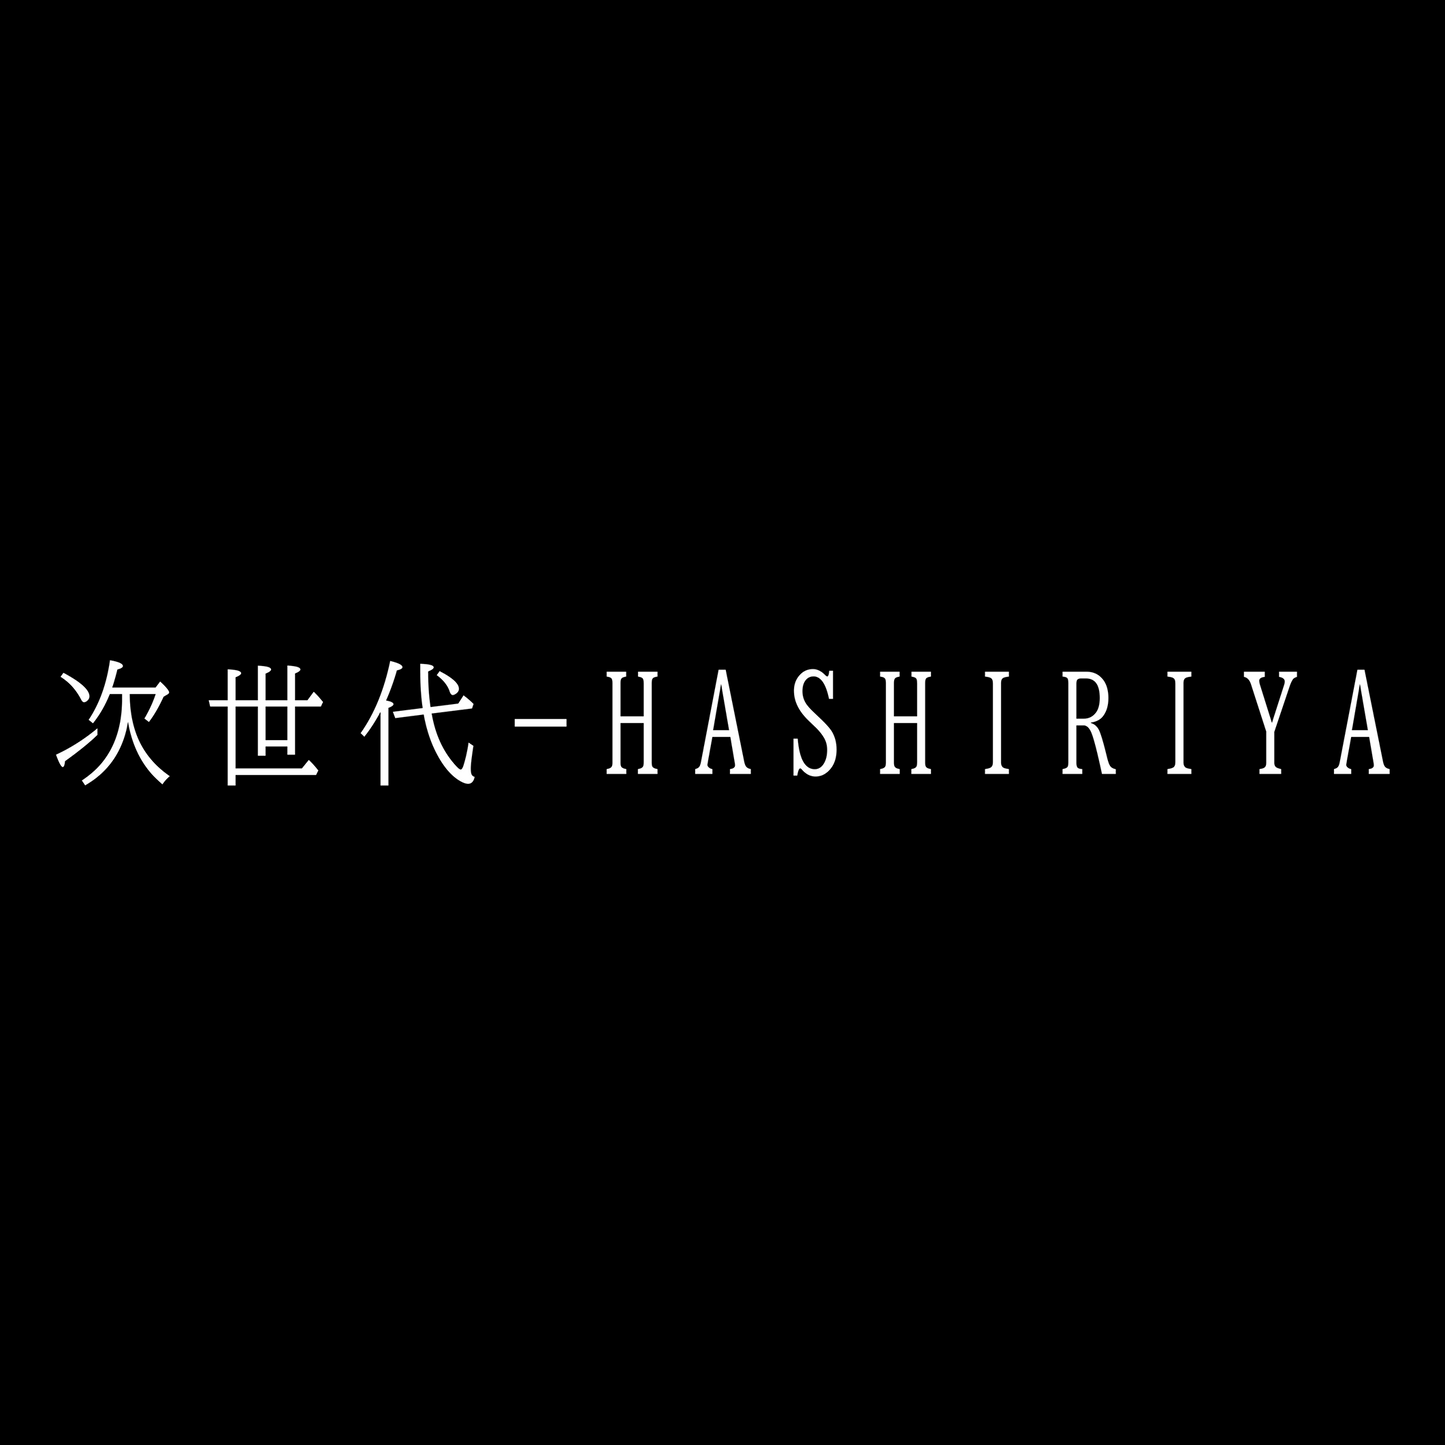 [𝙎𝙊𝙇𝘿 𝙊𝙐𝙏] 'NEW-HASHIRIYA' Reflective White Sticker